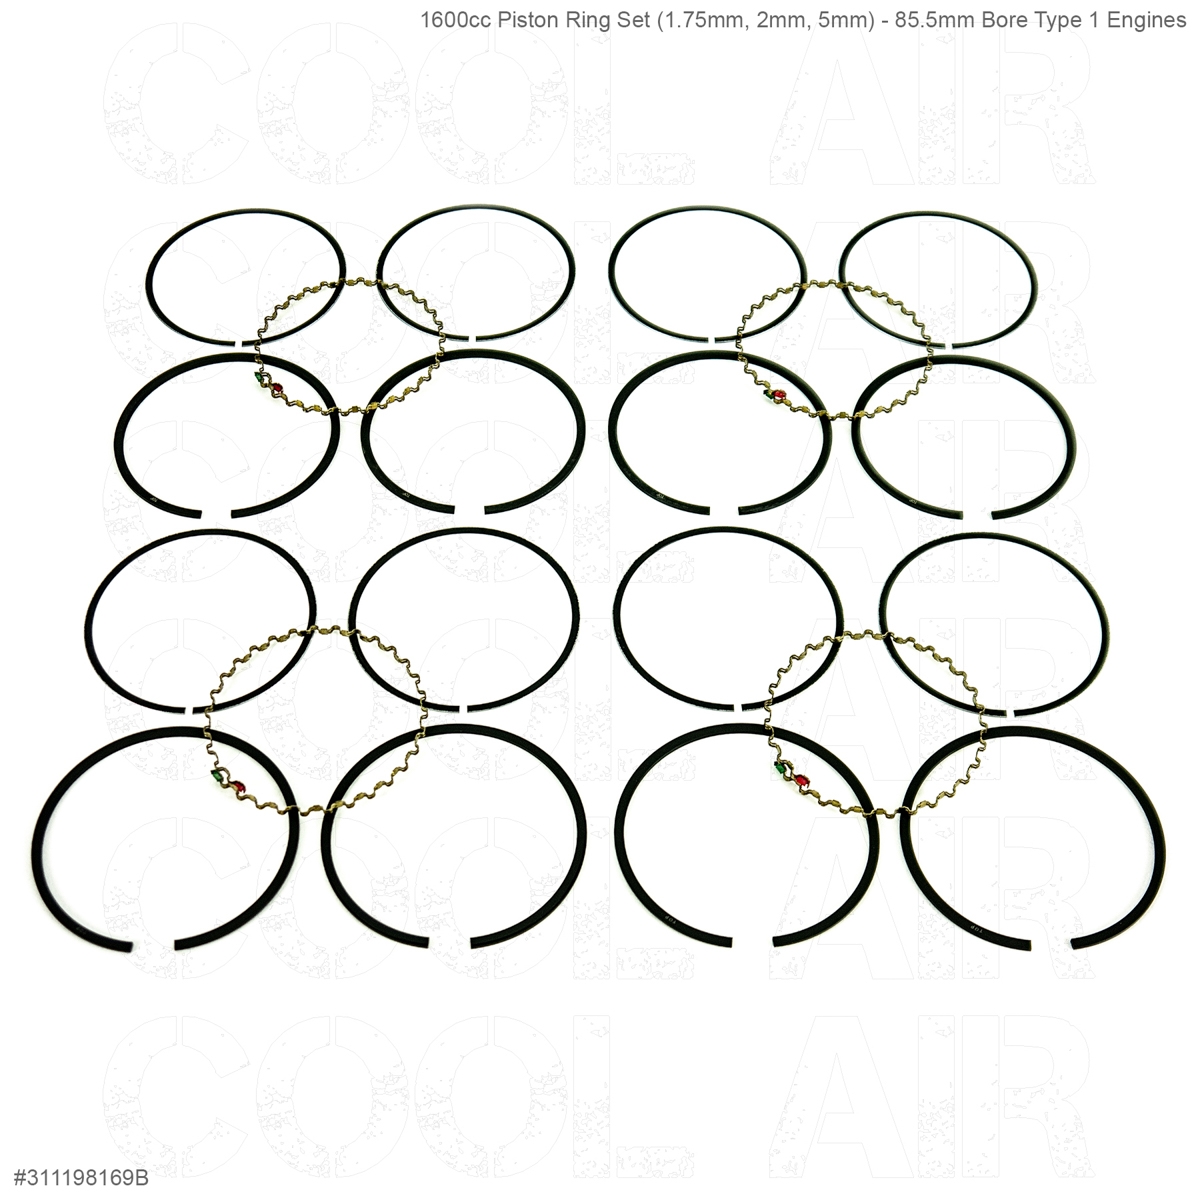 1600cc Piston Ring Set (1.75mm, 2mm, 5mm) - 85.5mm Bore Type 1 Engines